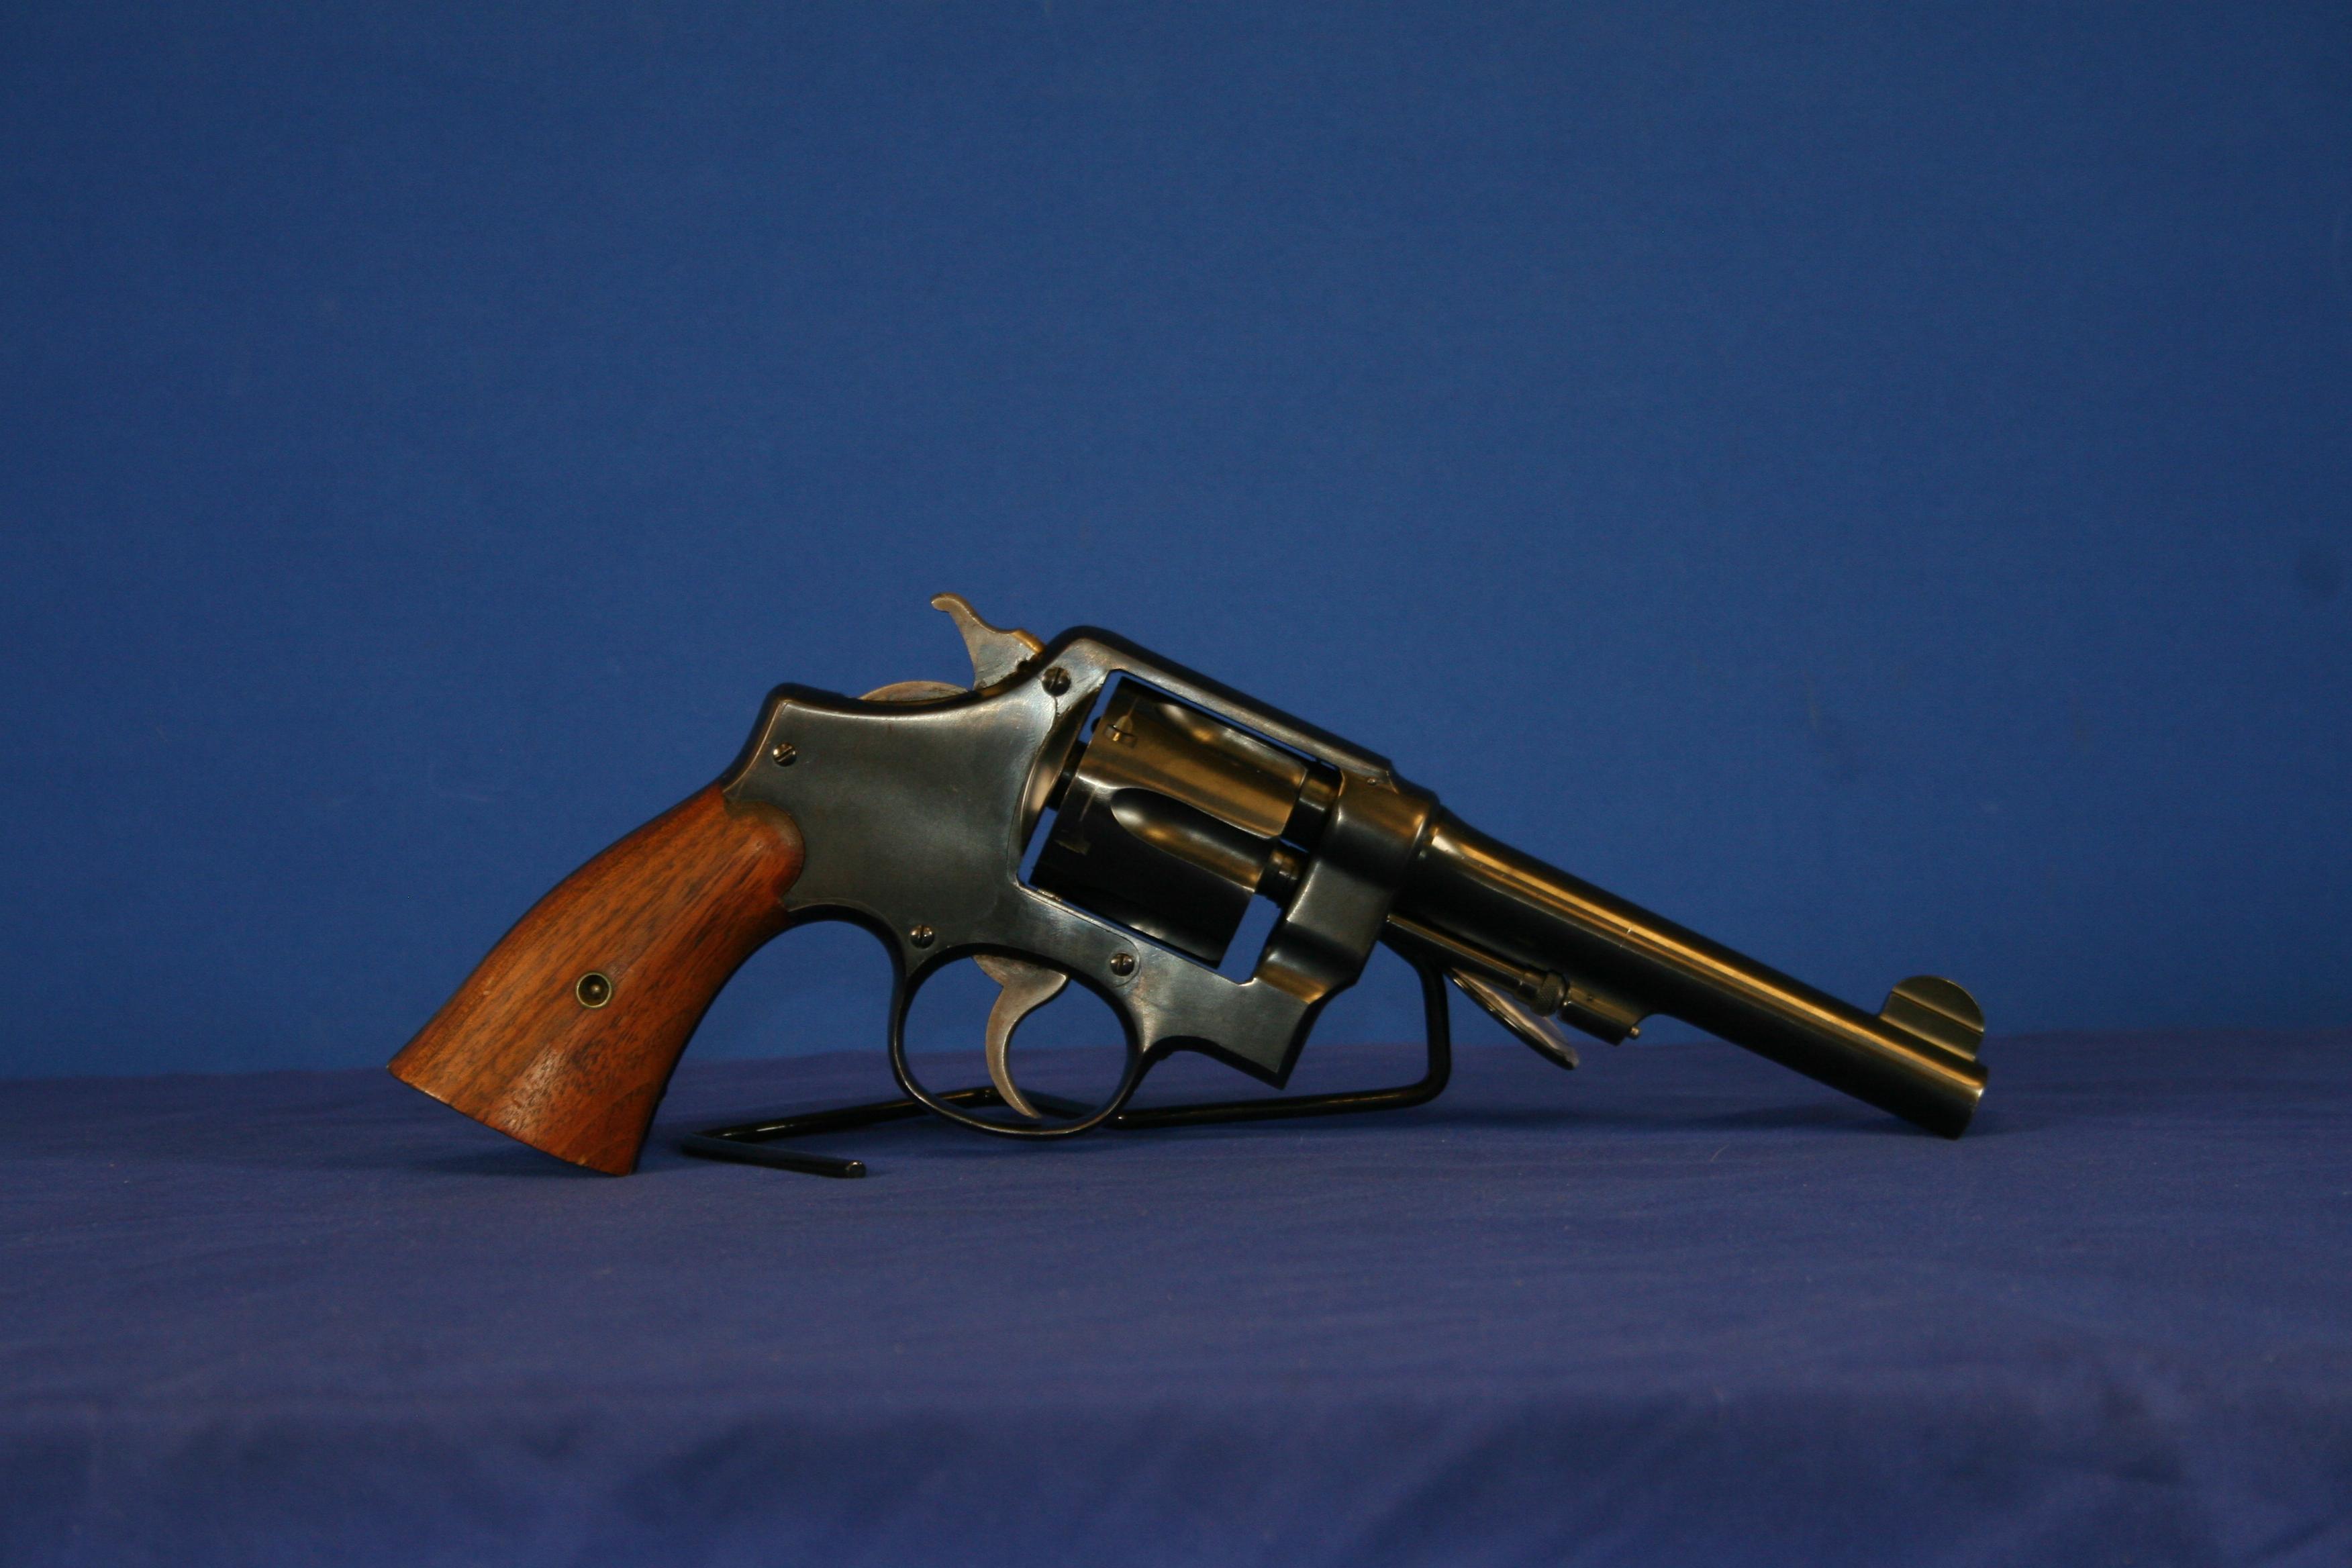 Smith & Wesson 45 ACP. 1917 Revolver 5.5" Barrel. SN# 91450. C&R